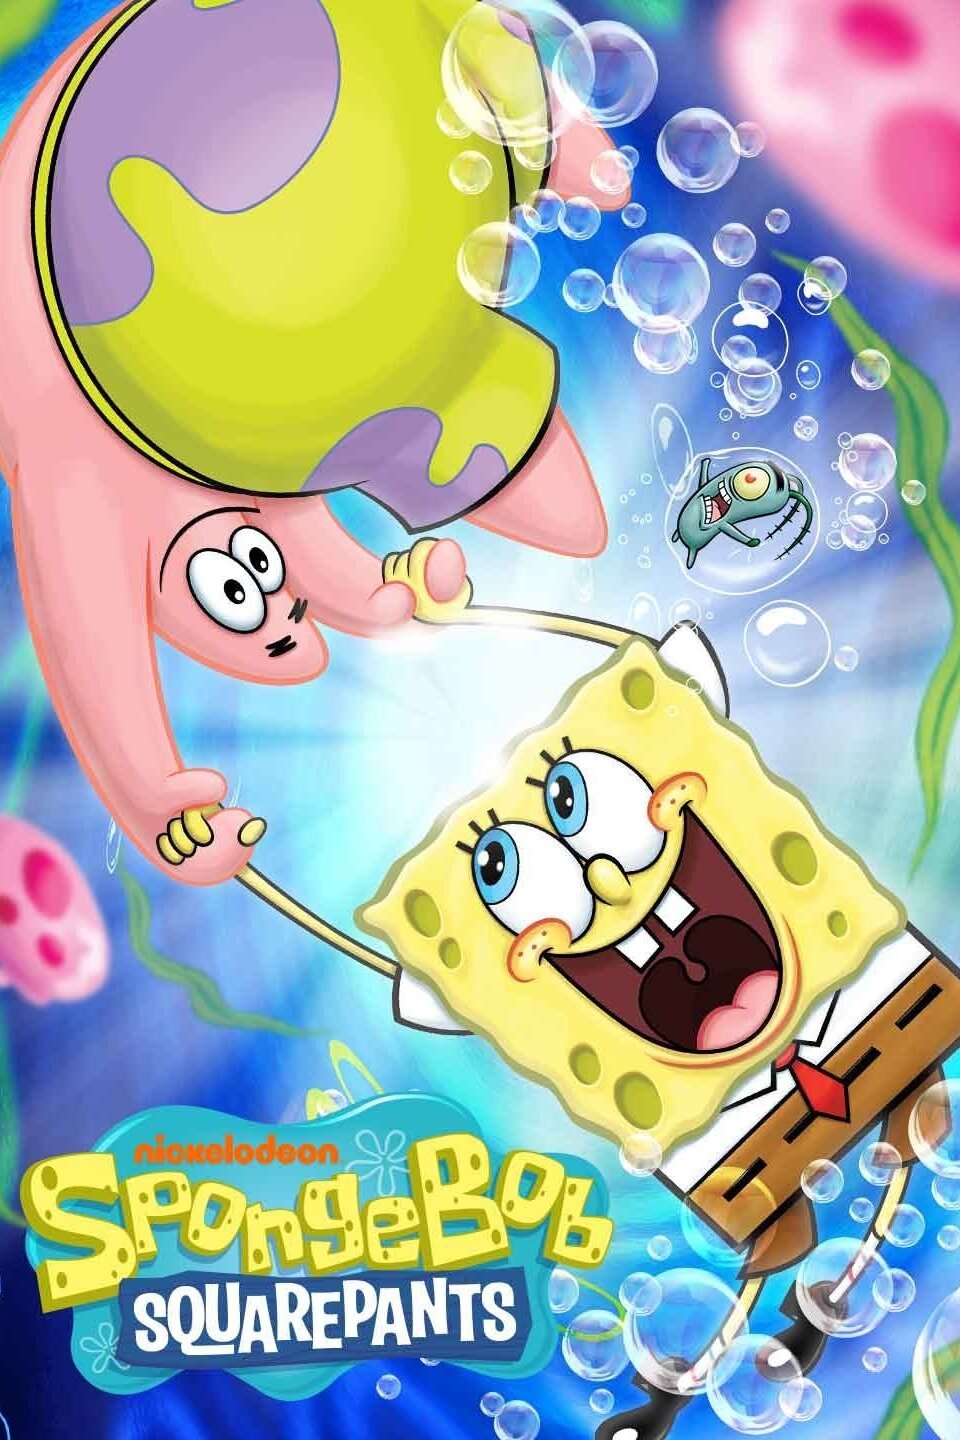 pictures of spongebob  Spongebob  Spongebob Squarepants Photo 33210737   Fanpop fanclubs  Spongebob drawings Squarepants Spongebob wallpaper